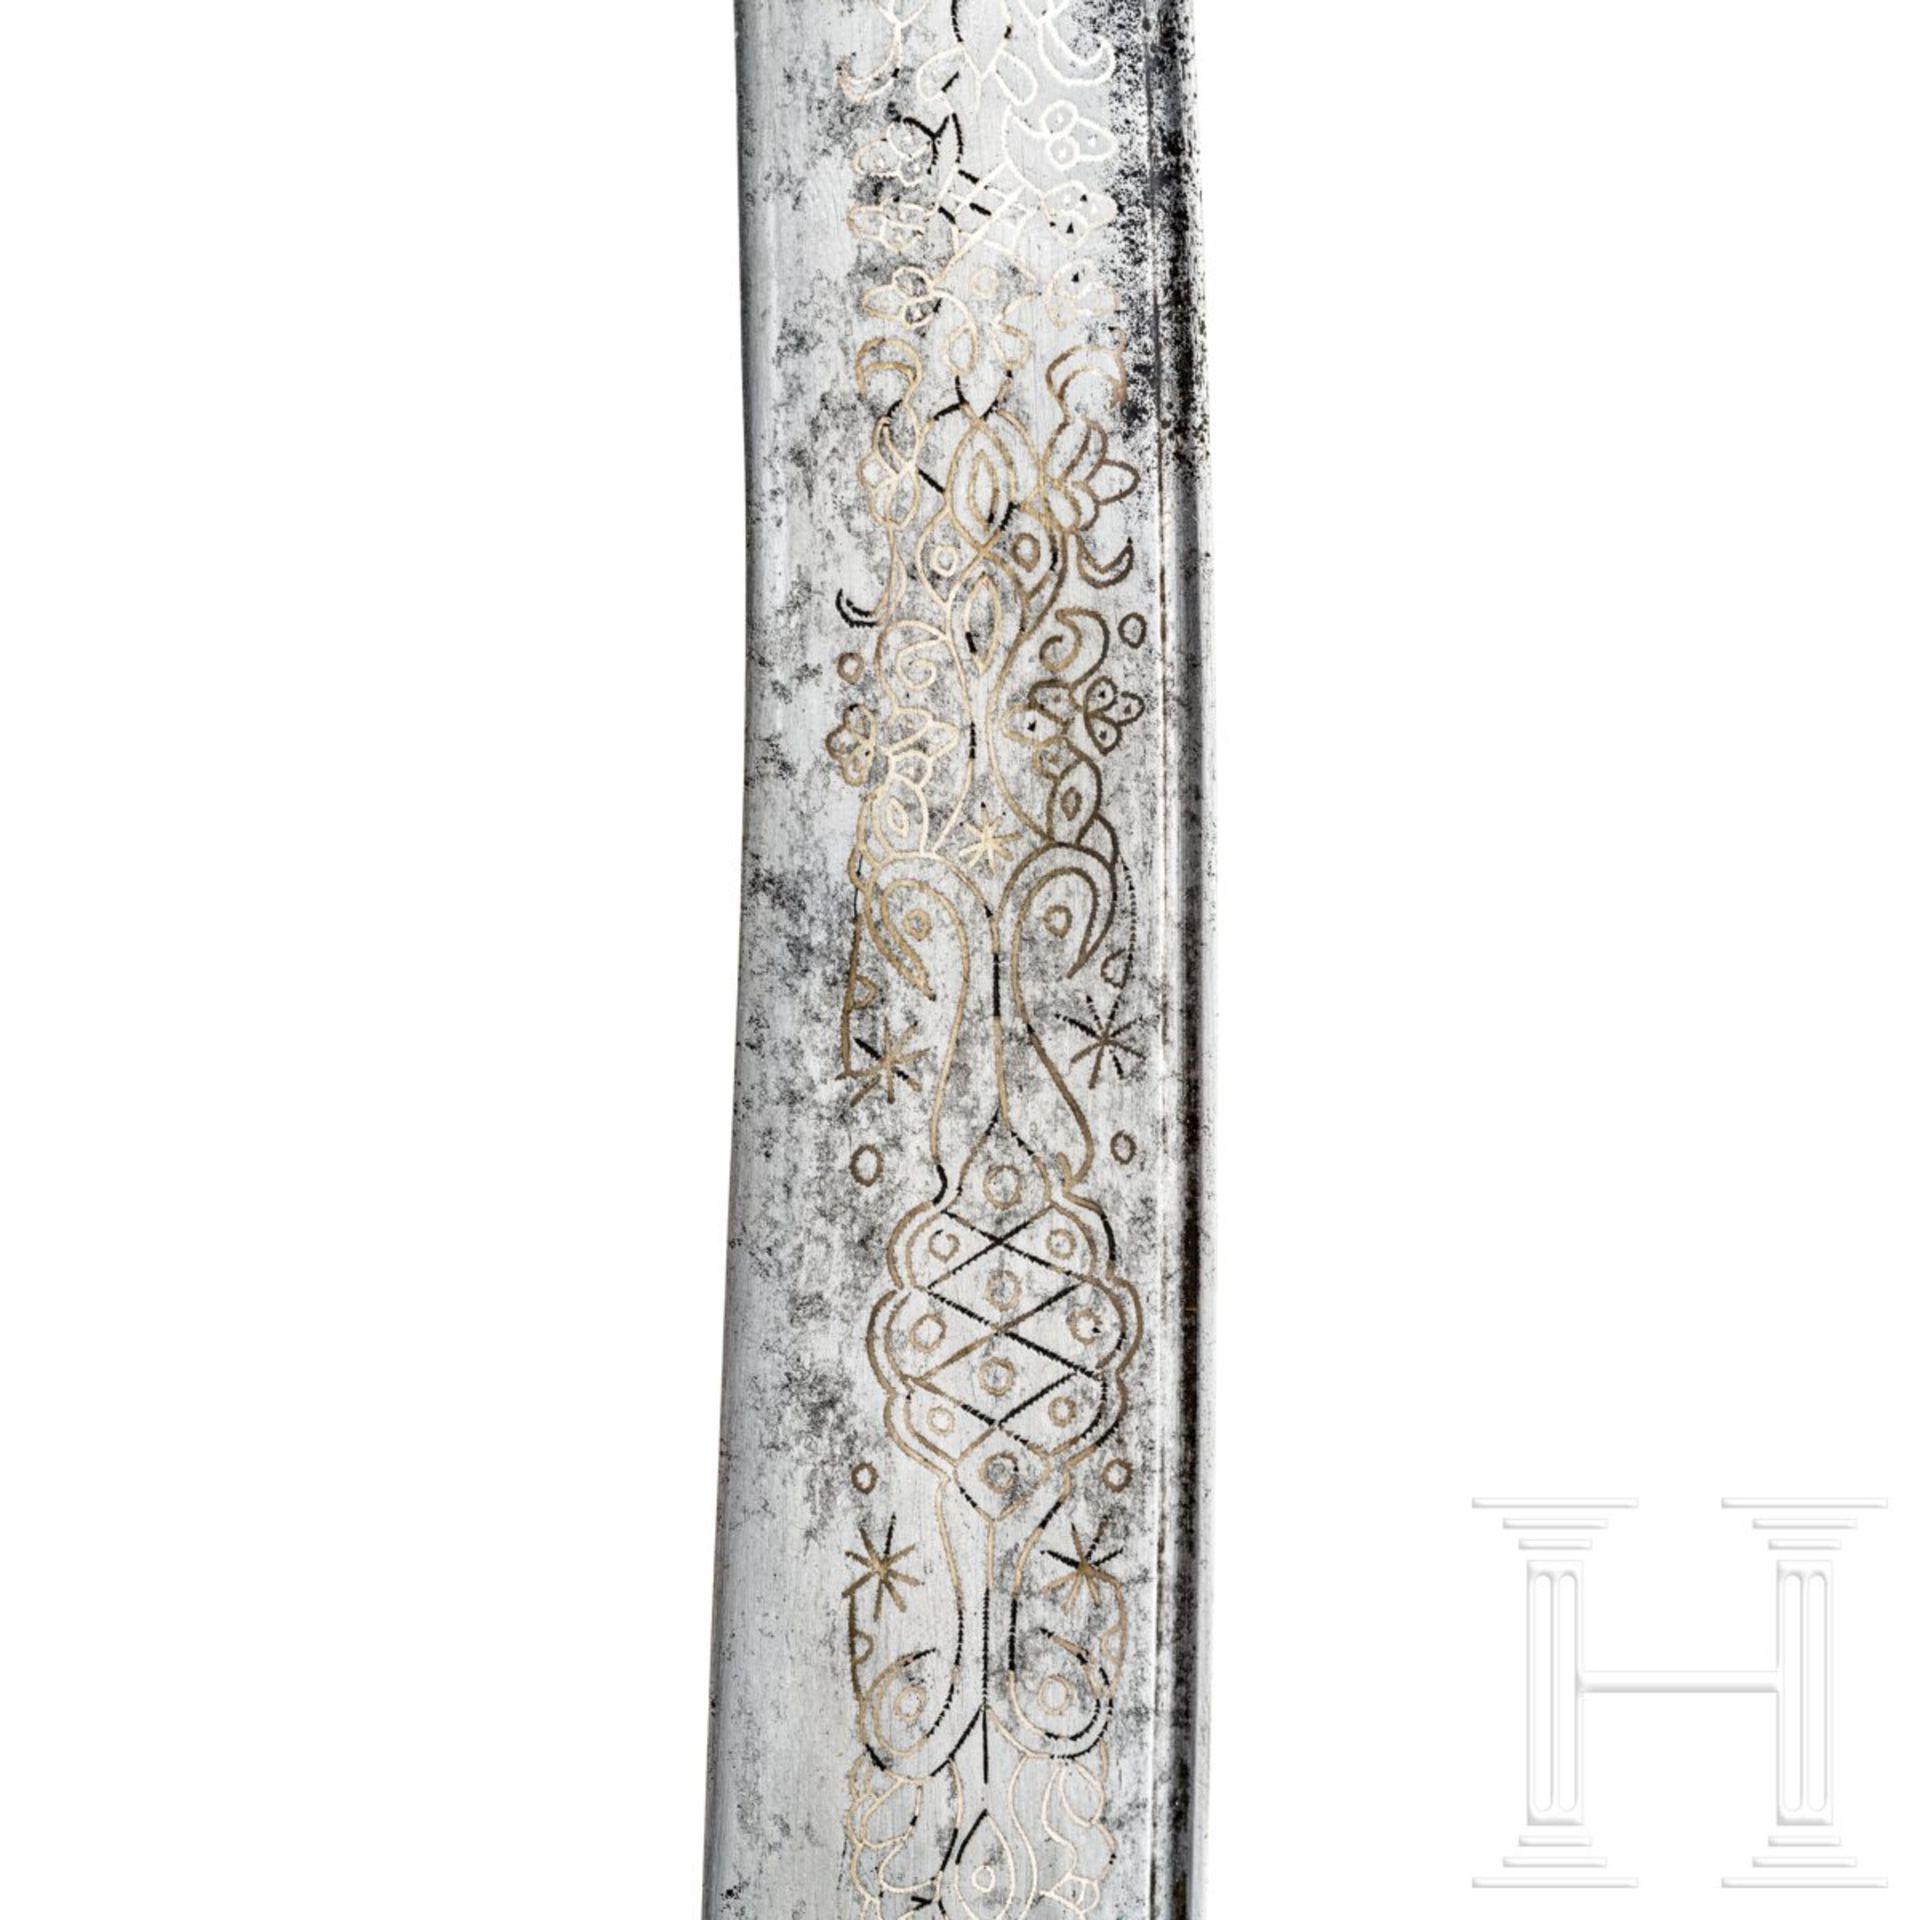 Silbereingelegter Yatagan, osmanisch, datiert 1802 - Image 8 of 8